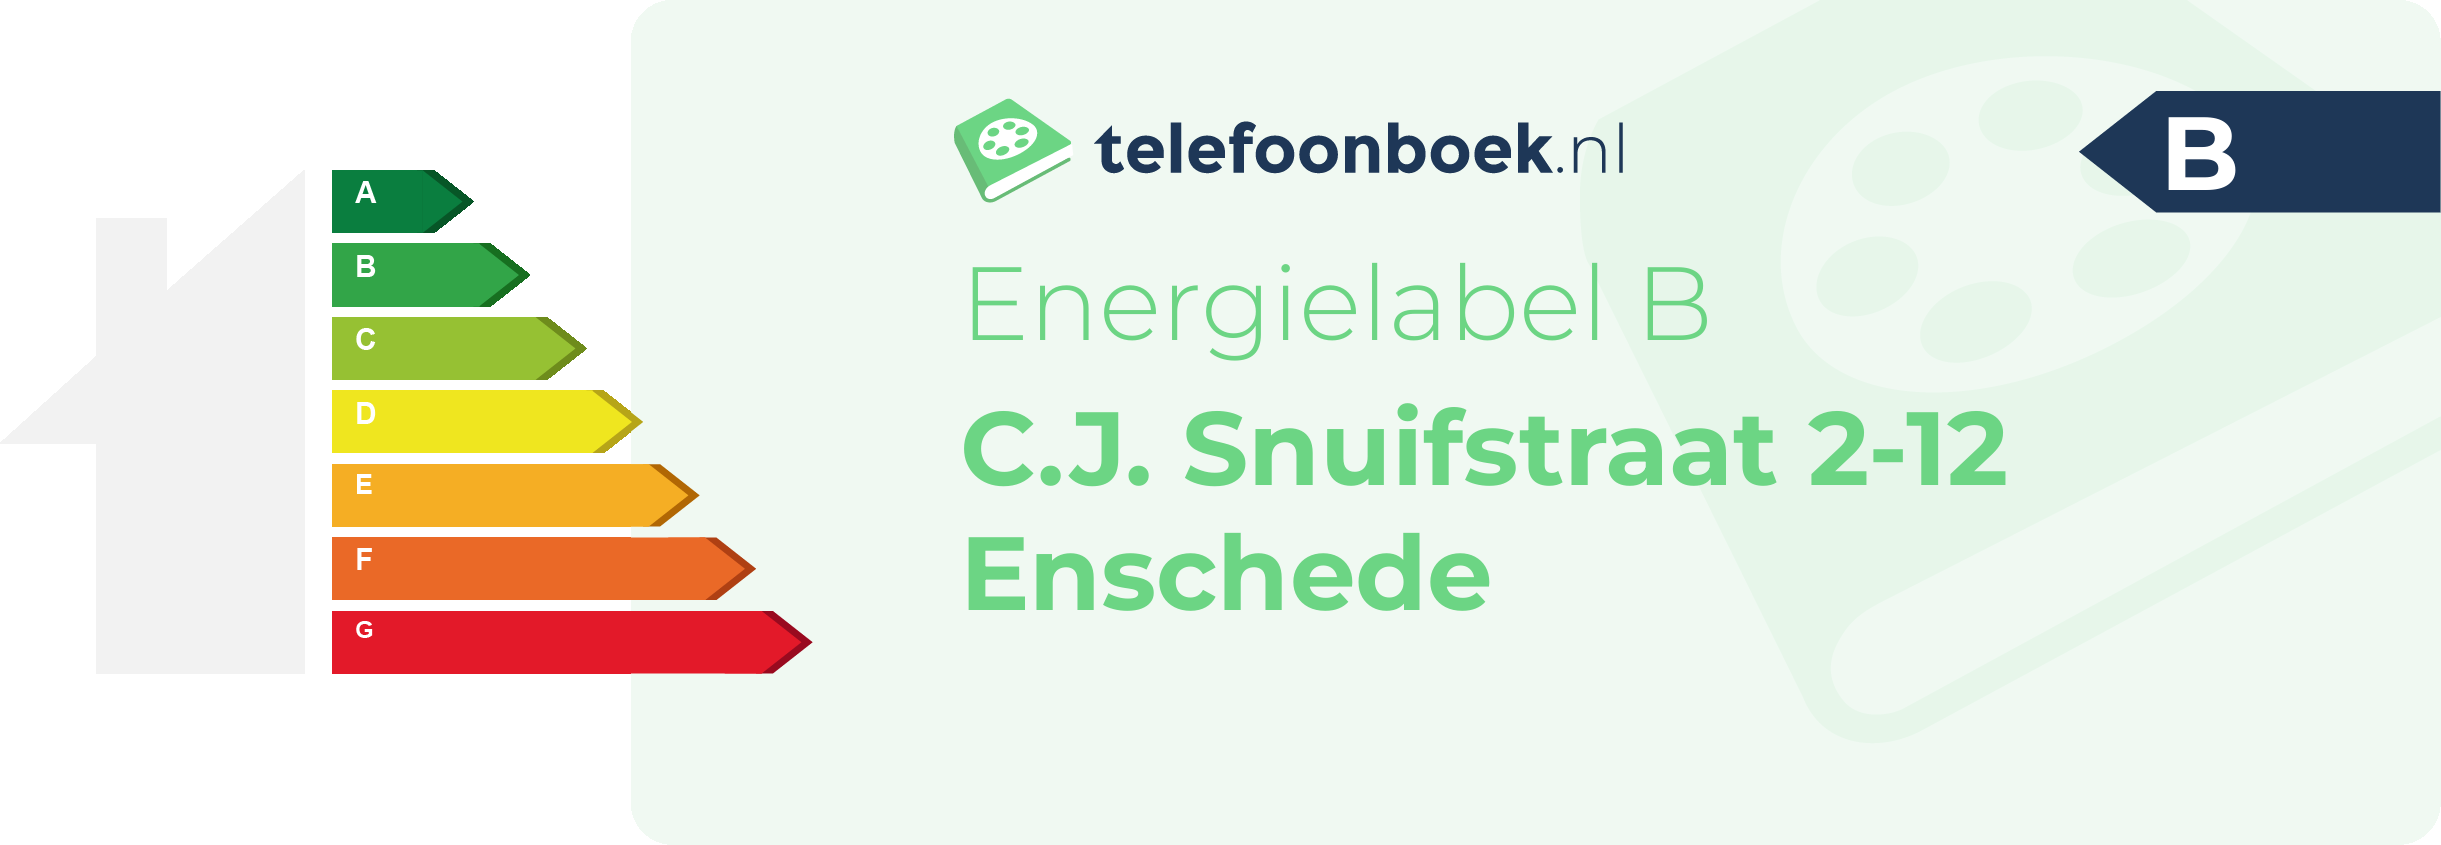 Energielabel C.J. Snuifstraat 2-12 Enschede